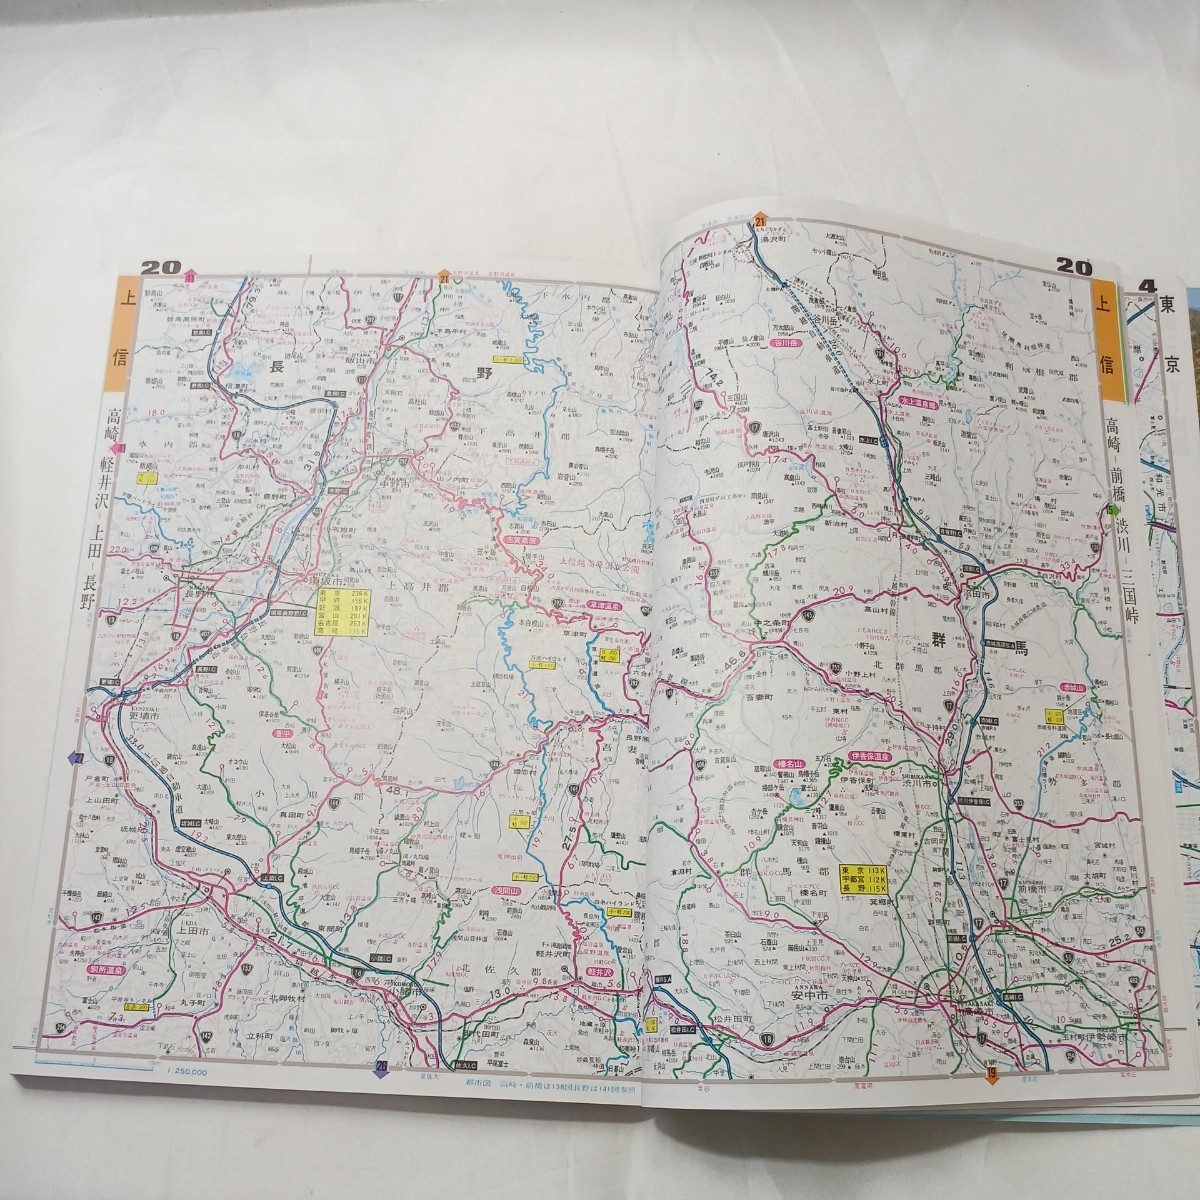 zaa-503♪ワイド全国版道路地図 (ルチエールワイド道路地図) 日地出版株式会社 (著) 1993年_画像6